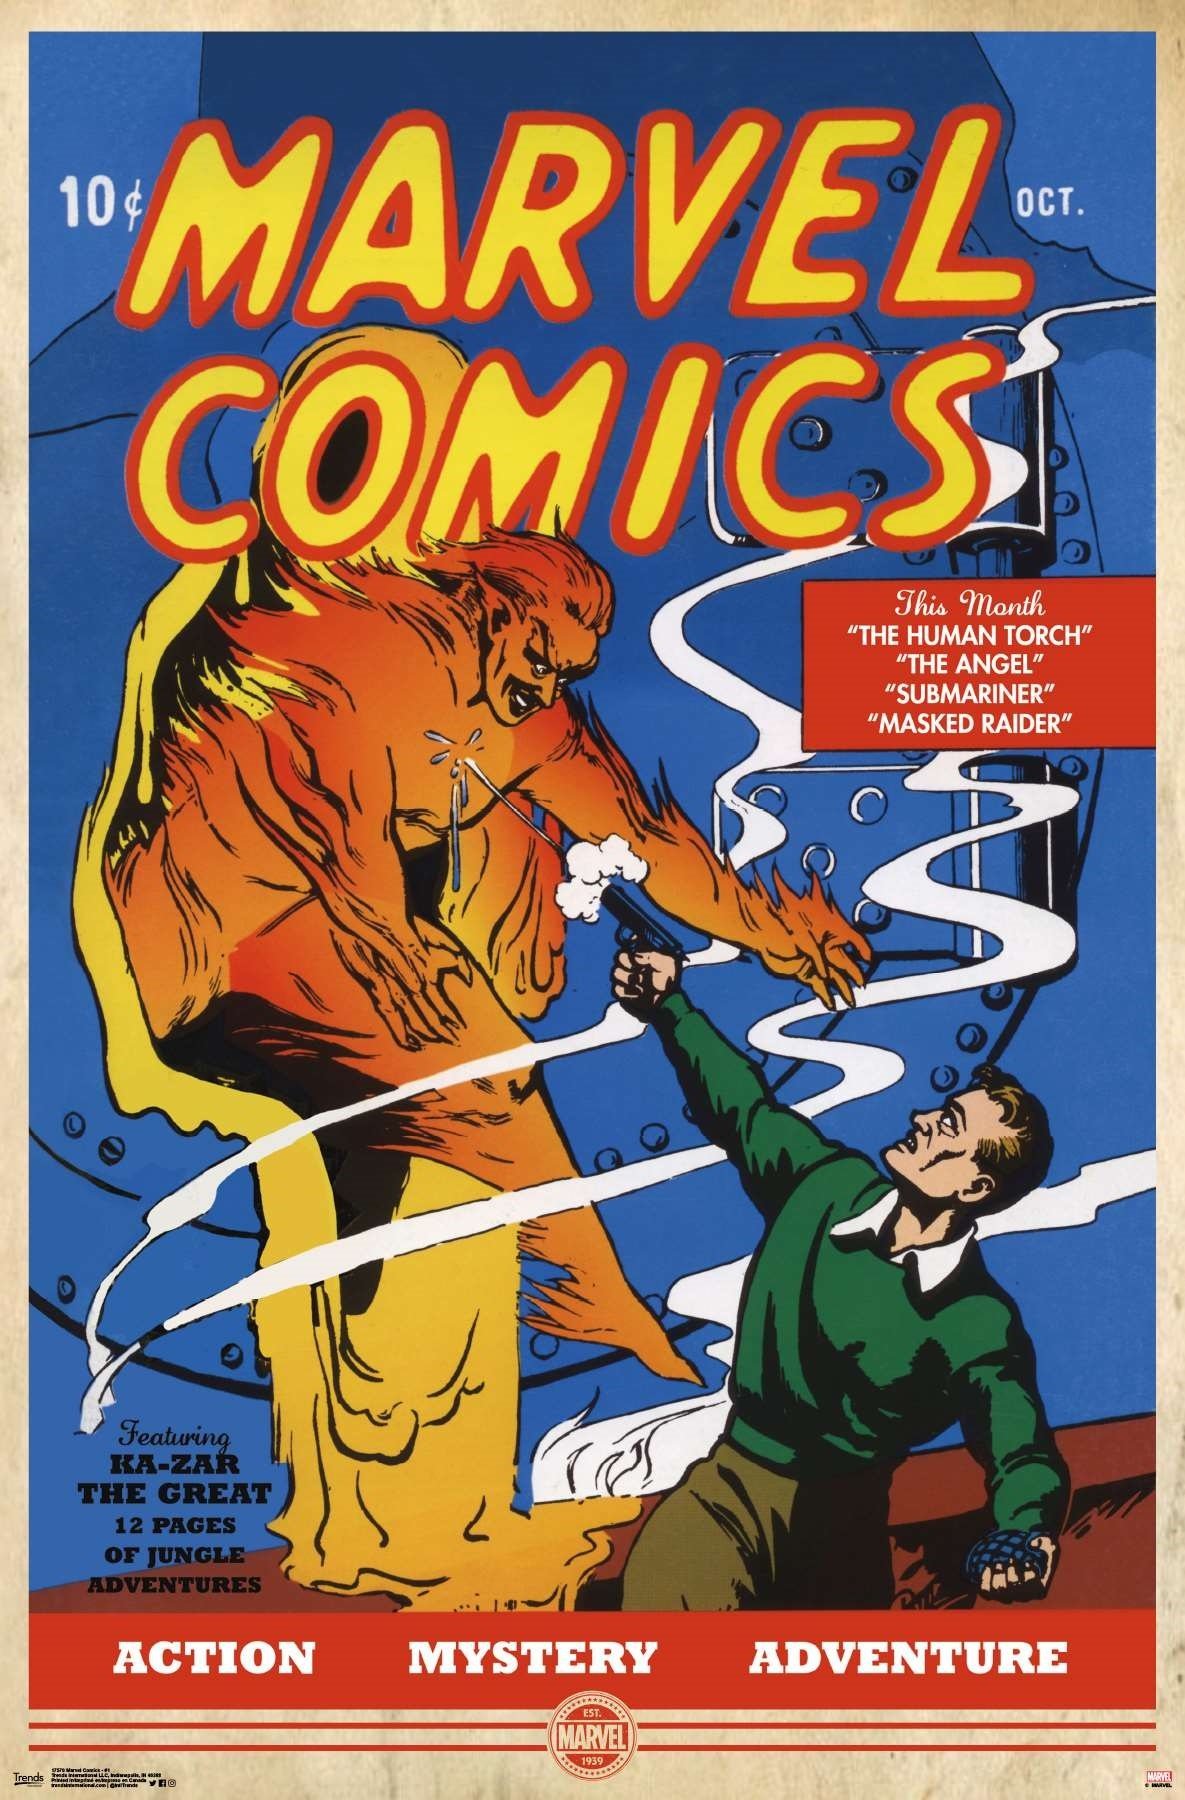 Marvel #1 (1939)